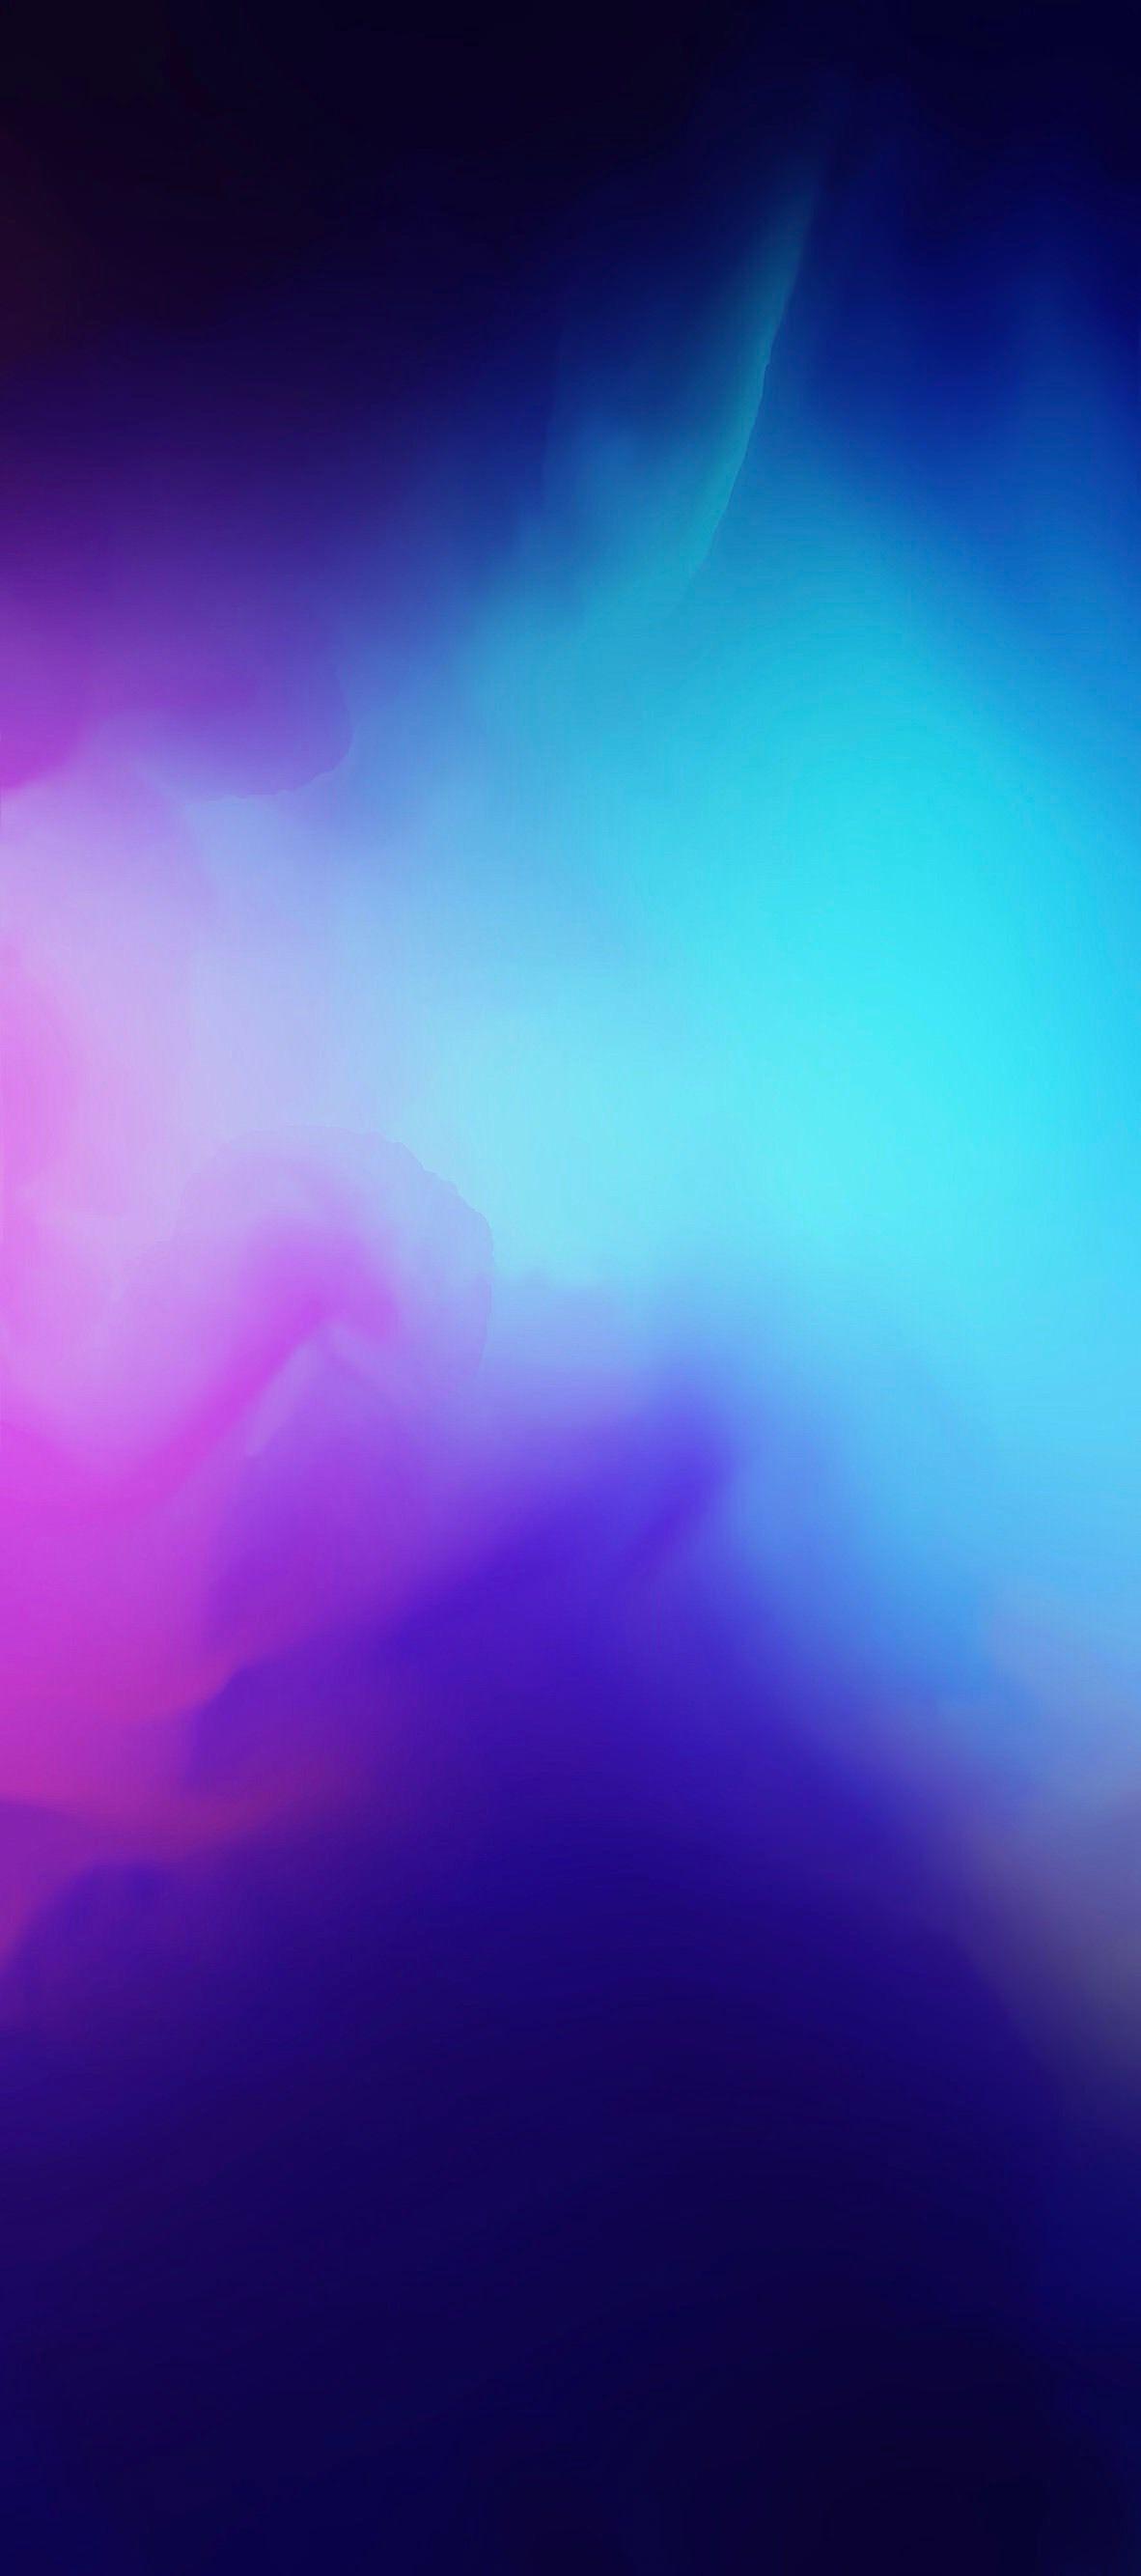 iOS iPhone X, blue, purple, abstract, apple, wallpaper